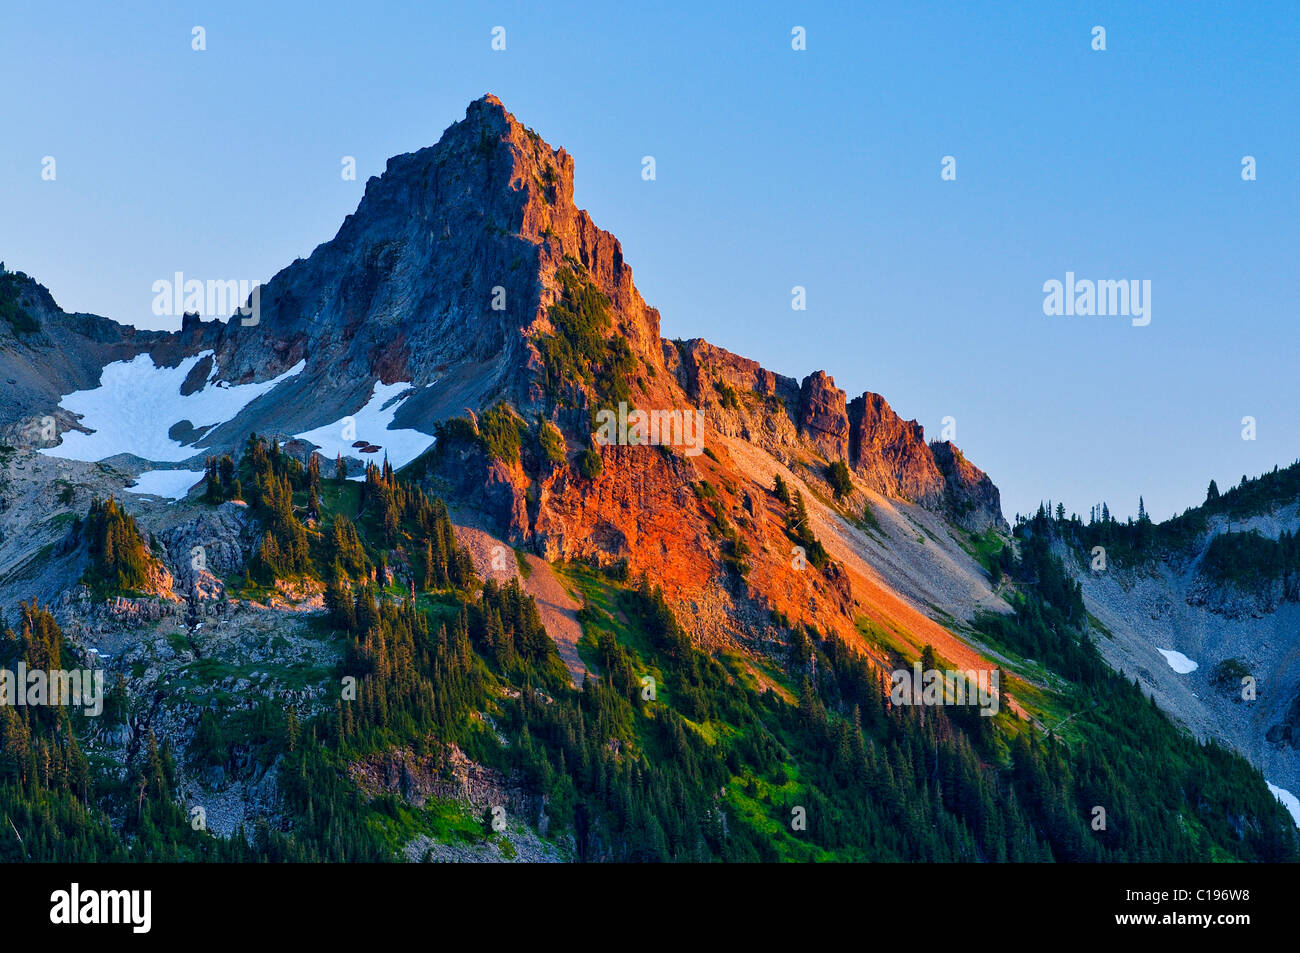 Pinnacle Peak, Mt. Rainier National Park, Washington, USA Banque D'Images